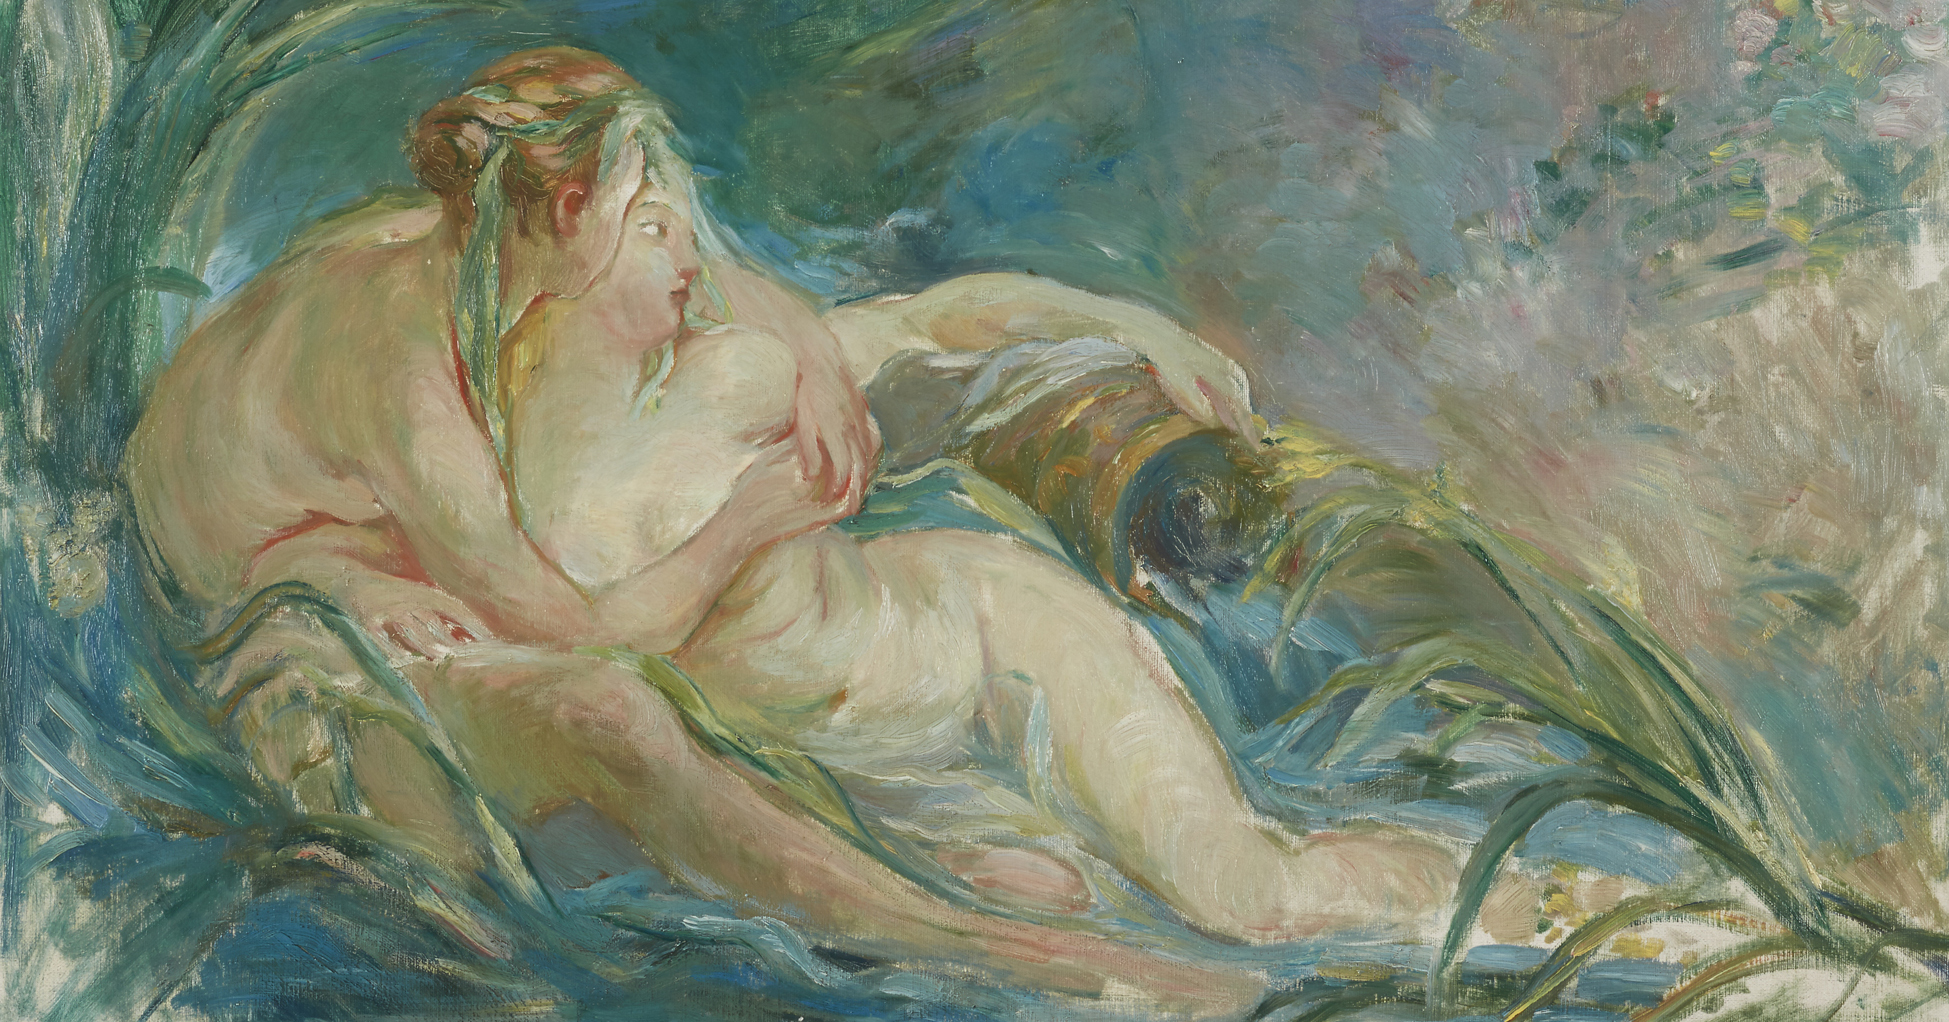 Freeman’s – Morisot, Van Gogh and Degas